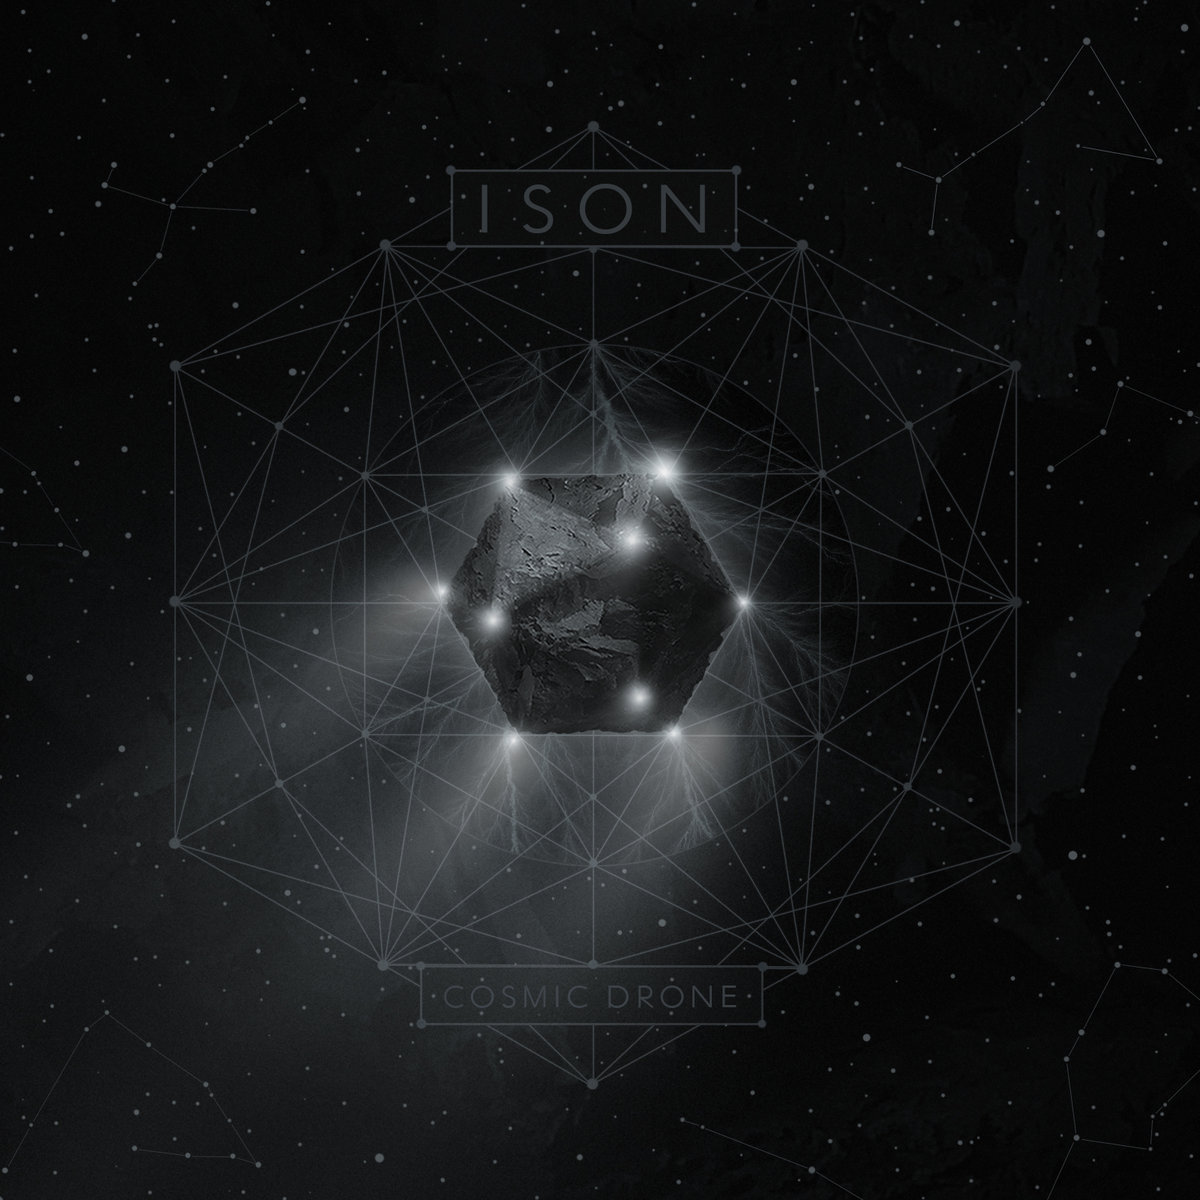 Ison_-_Cosmic_Drone_[EP]_(2015)